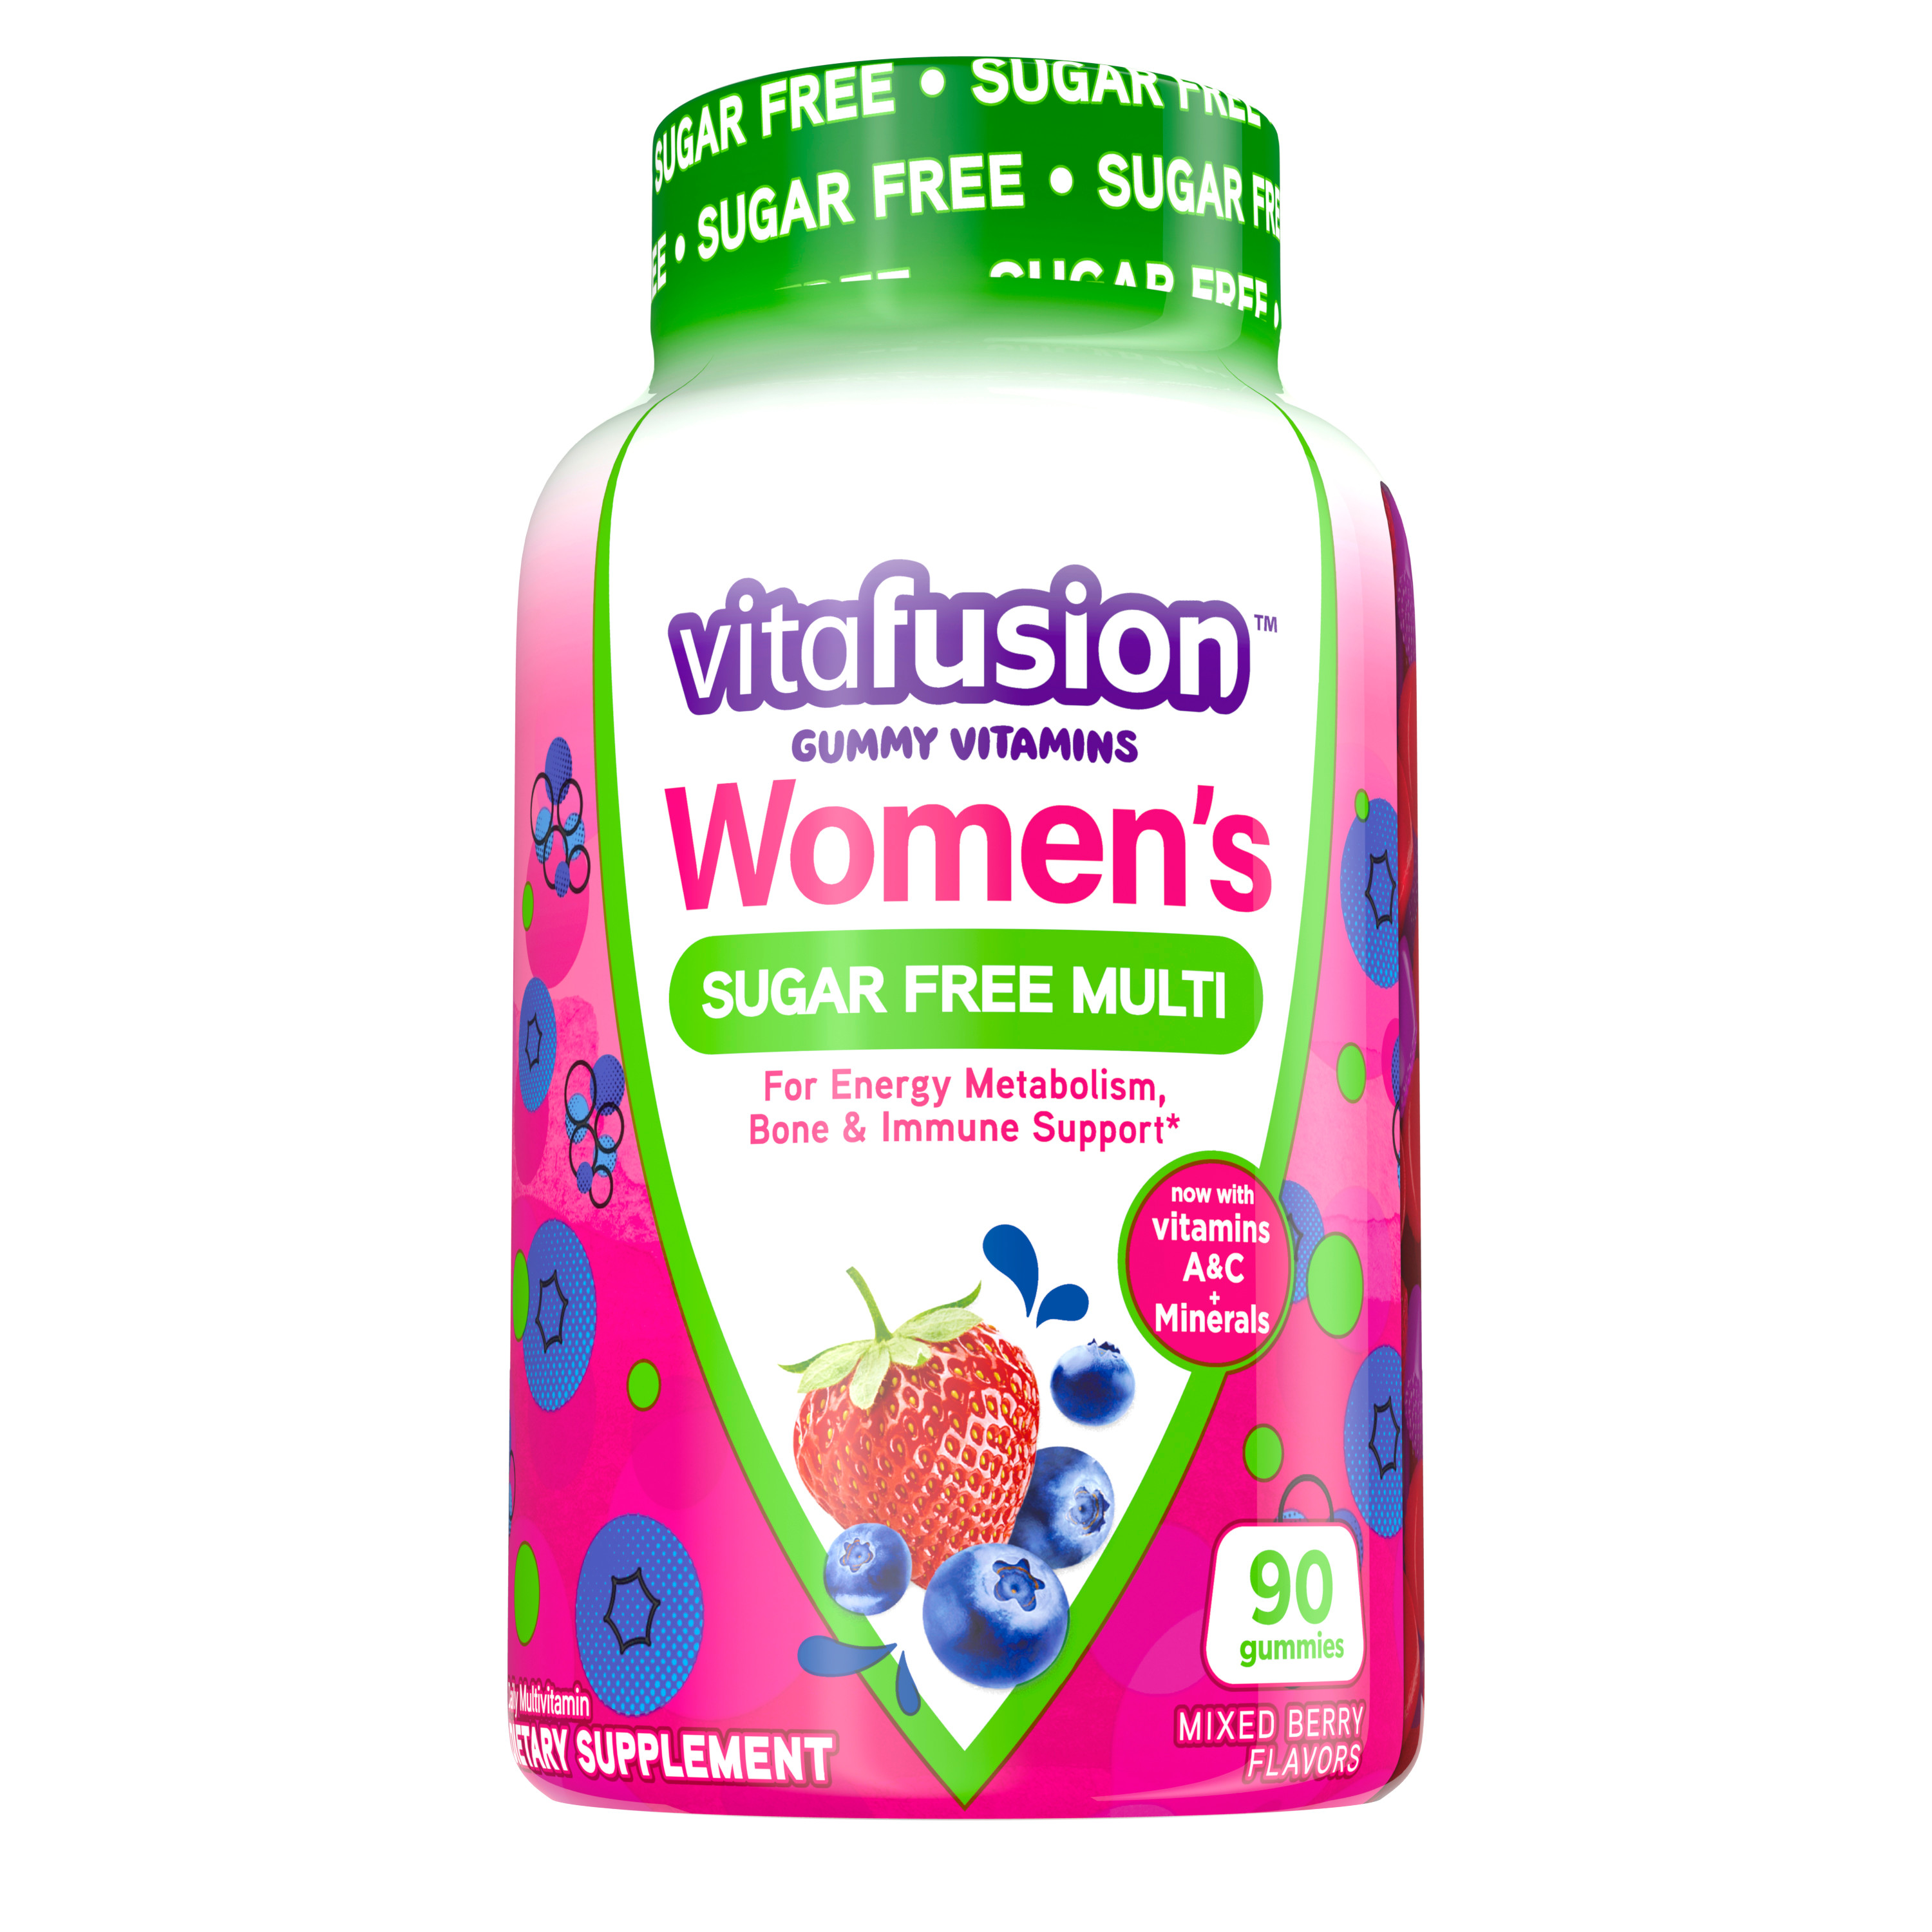 Vitafusion Women’s Sugar Free Daily Multivitamin Supplement, Adult Gummy Vitamin for Energy, Bone & Immune Support*, 90 Count